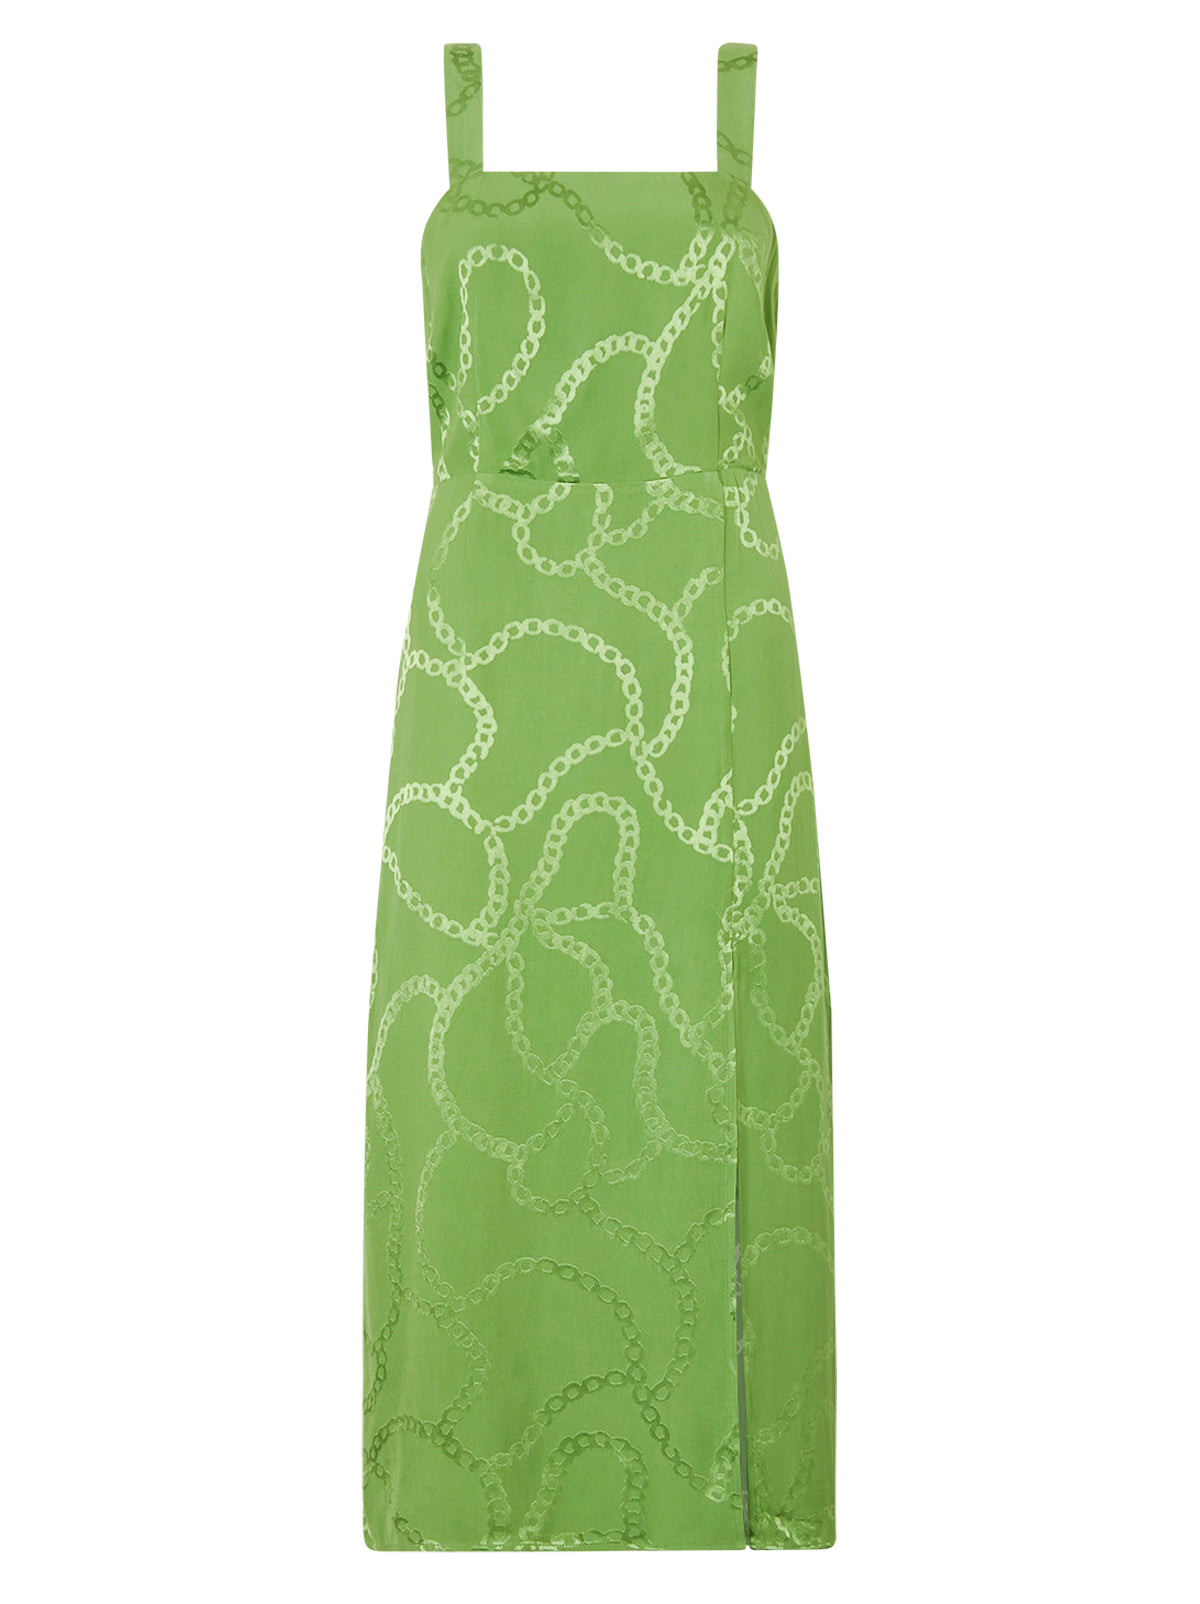 Mara Green Chain Jacquard Midi Dress By KITRI Studio